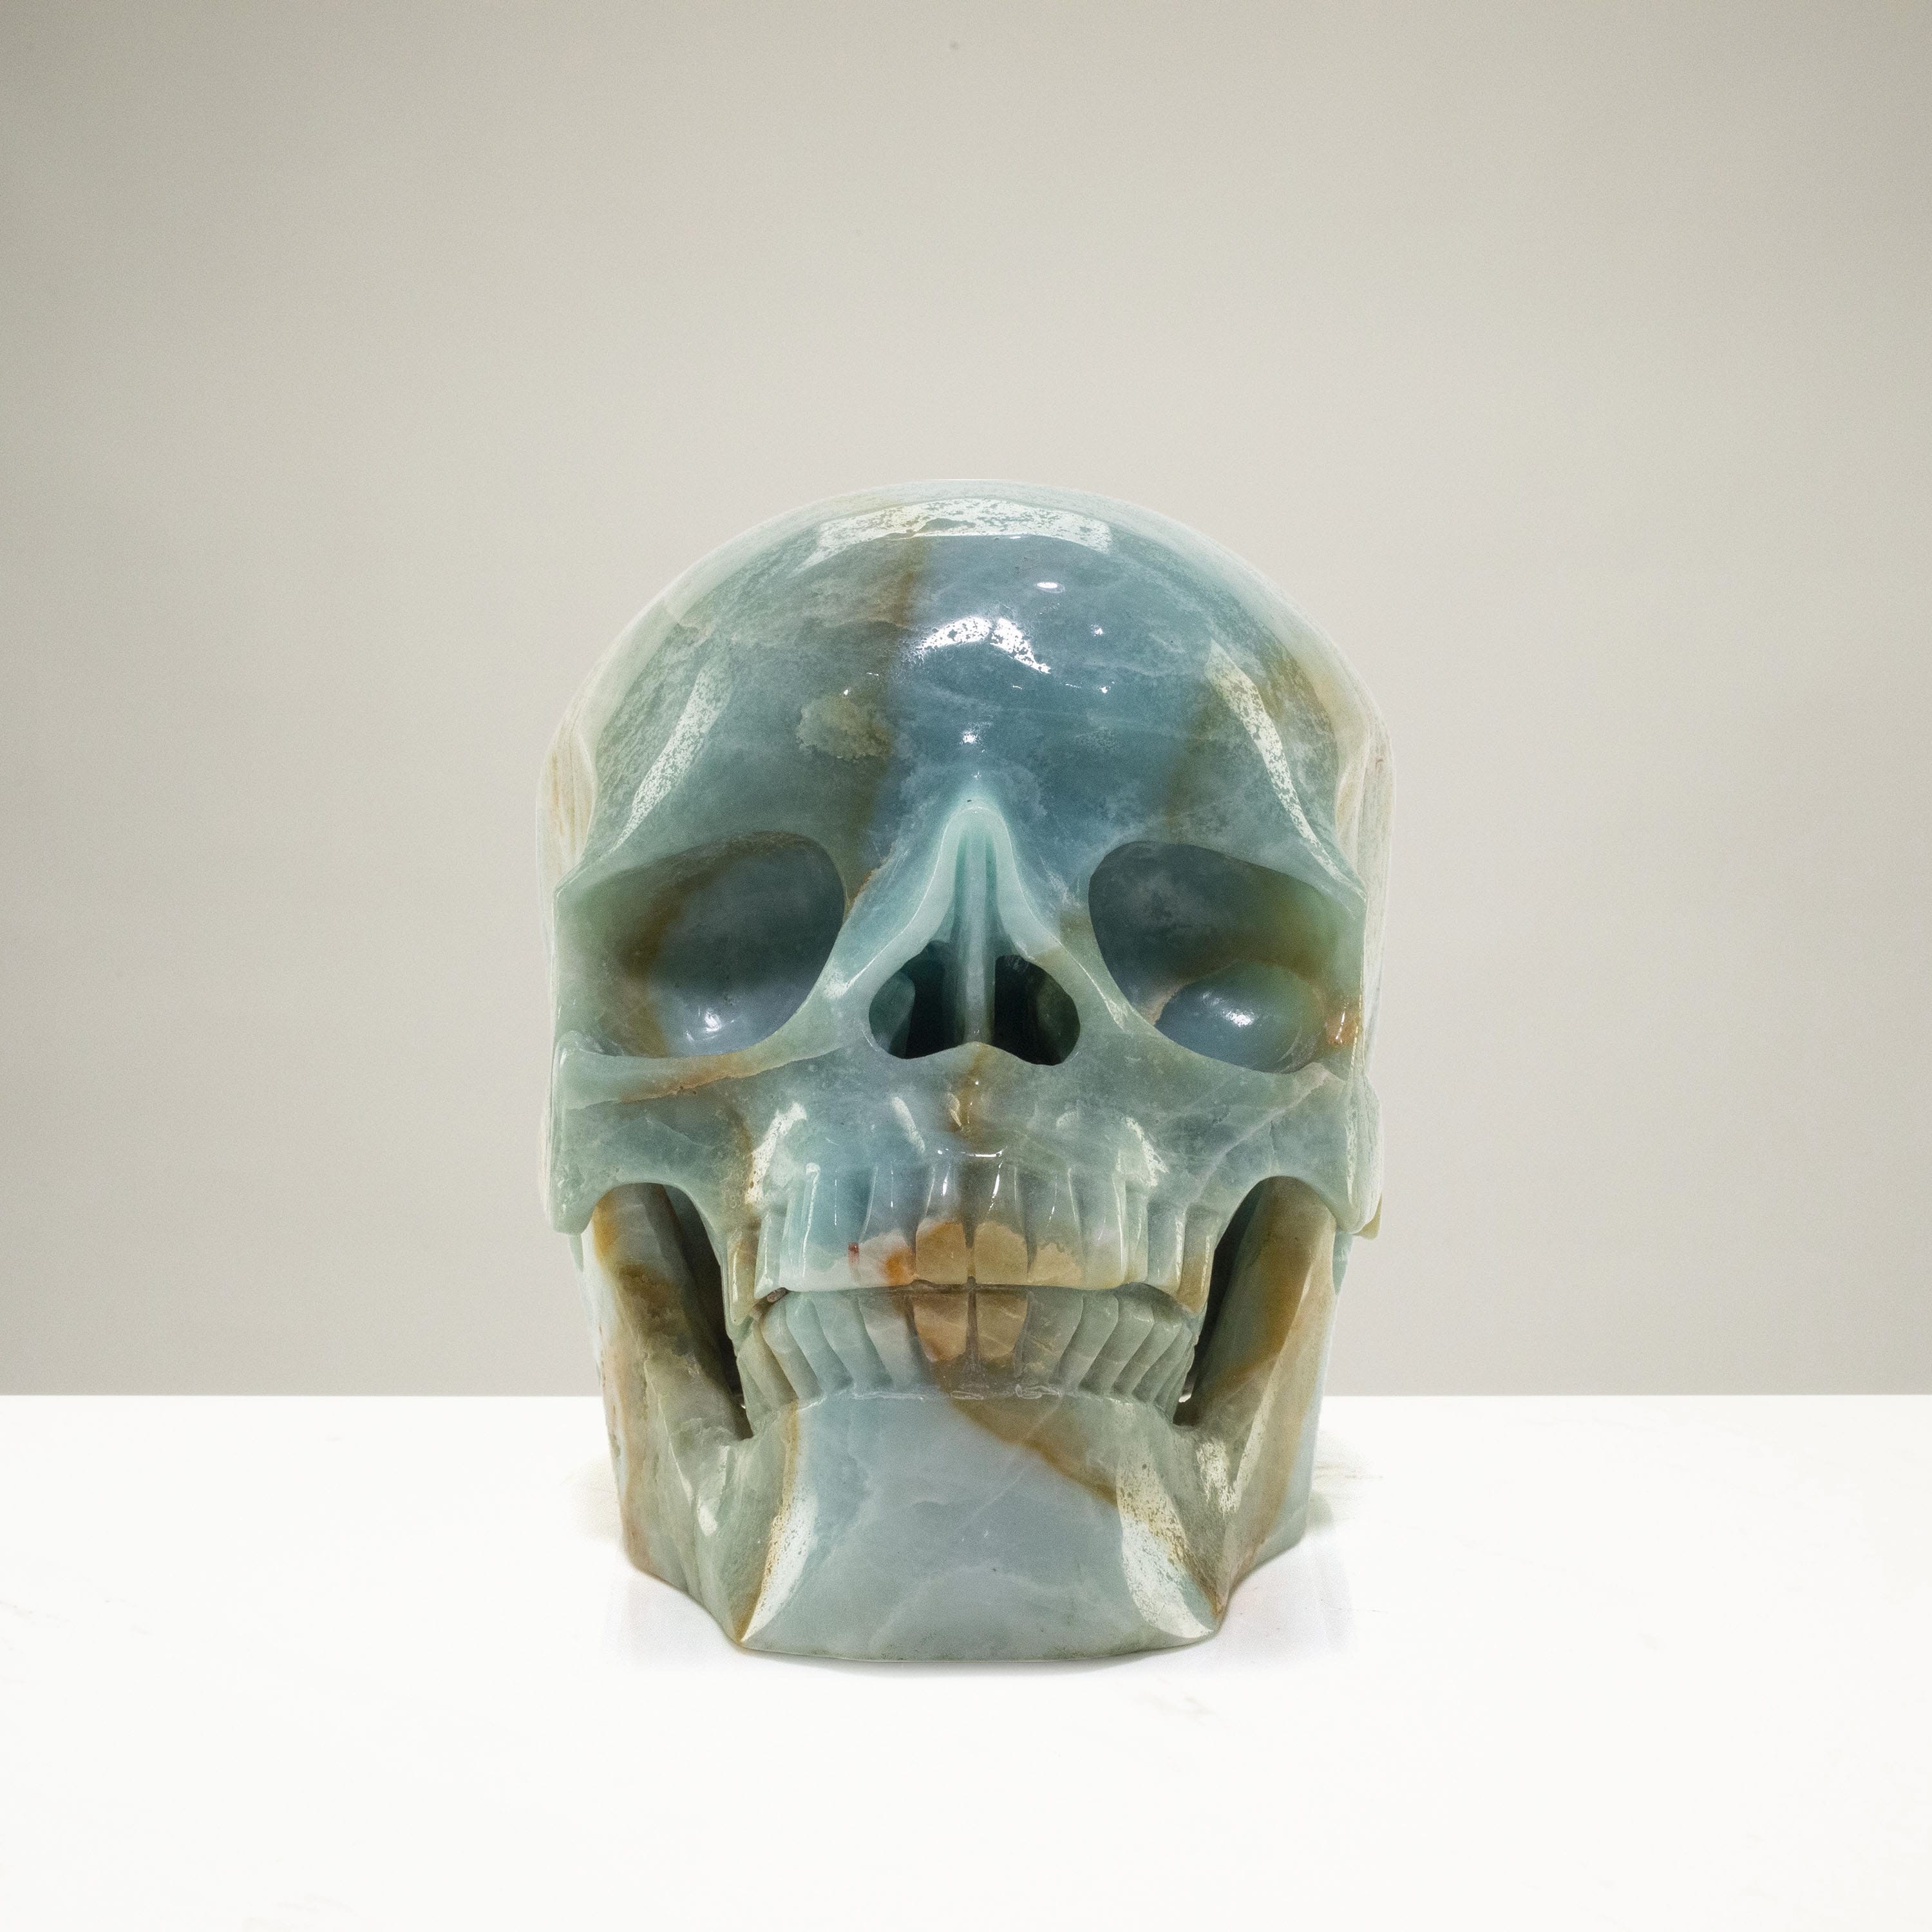 Kalifano Amazonite Amazonite Skull Carving 5.5" / 2,128g SK9000-AZ.001